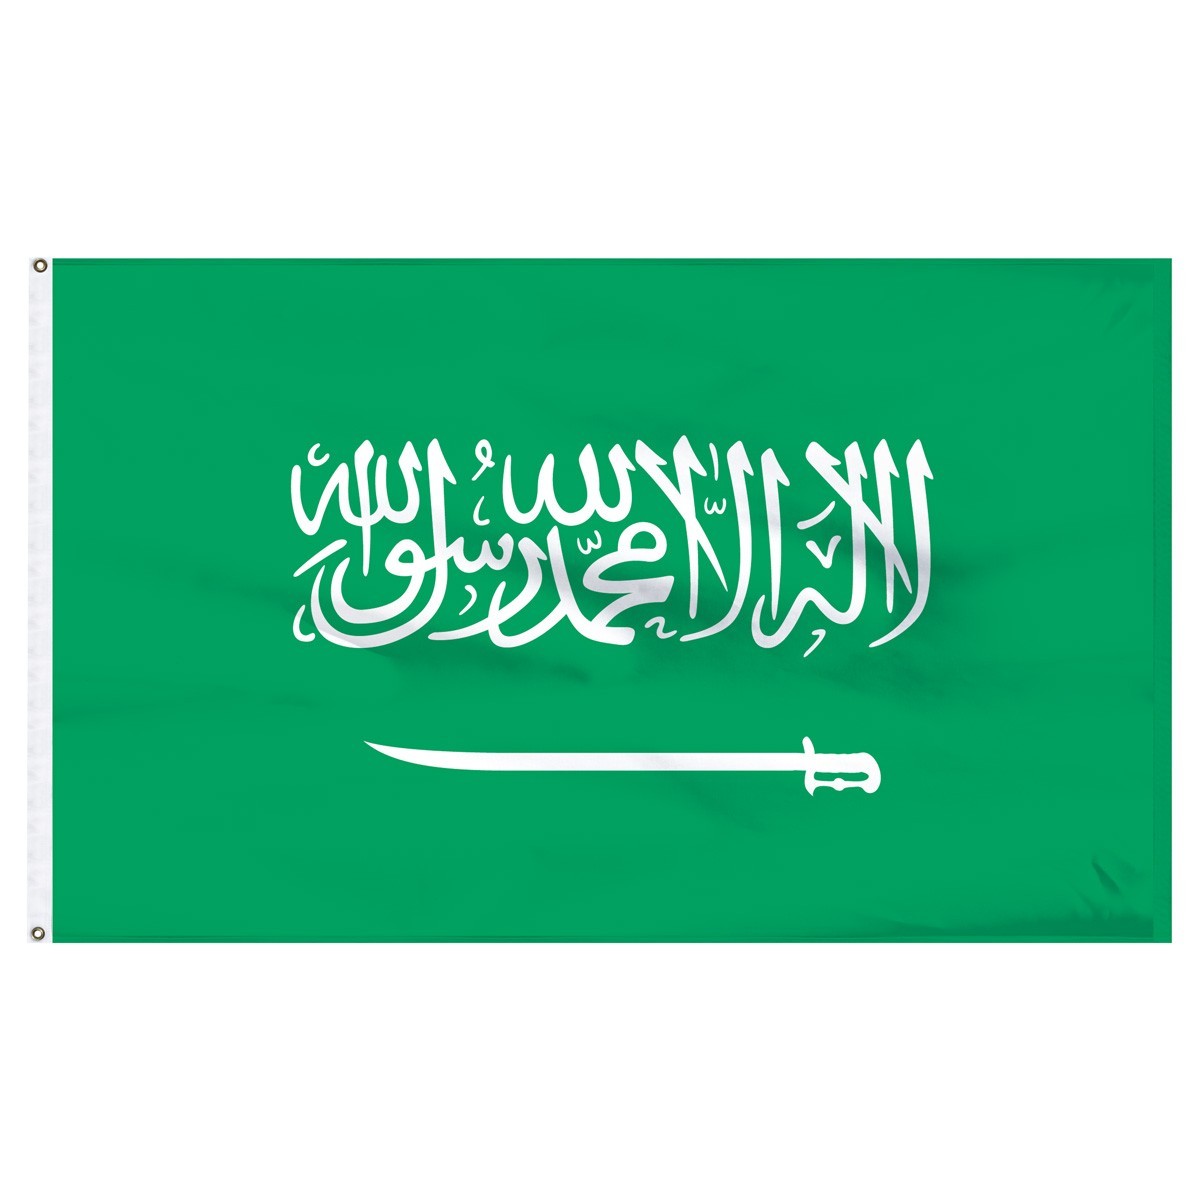 Saudi Arabia 3ft x 5ft Outdoor Nylon Flag